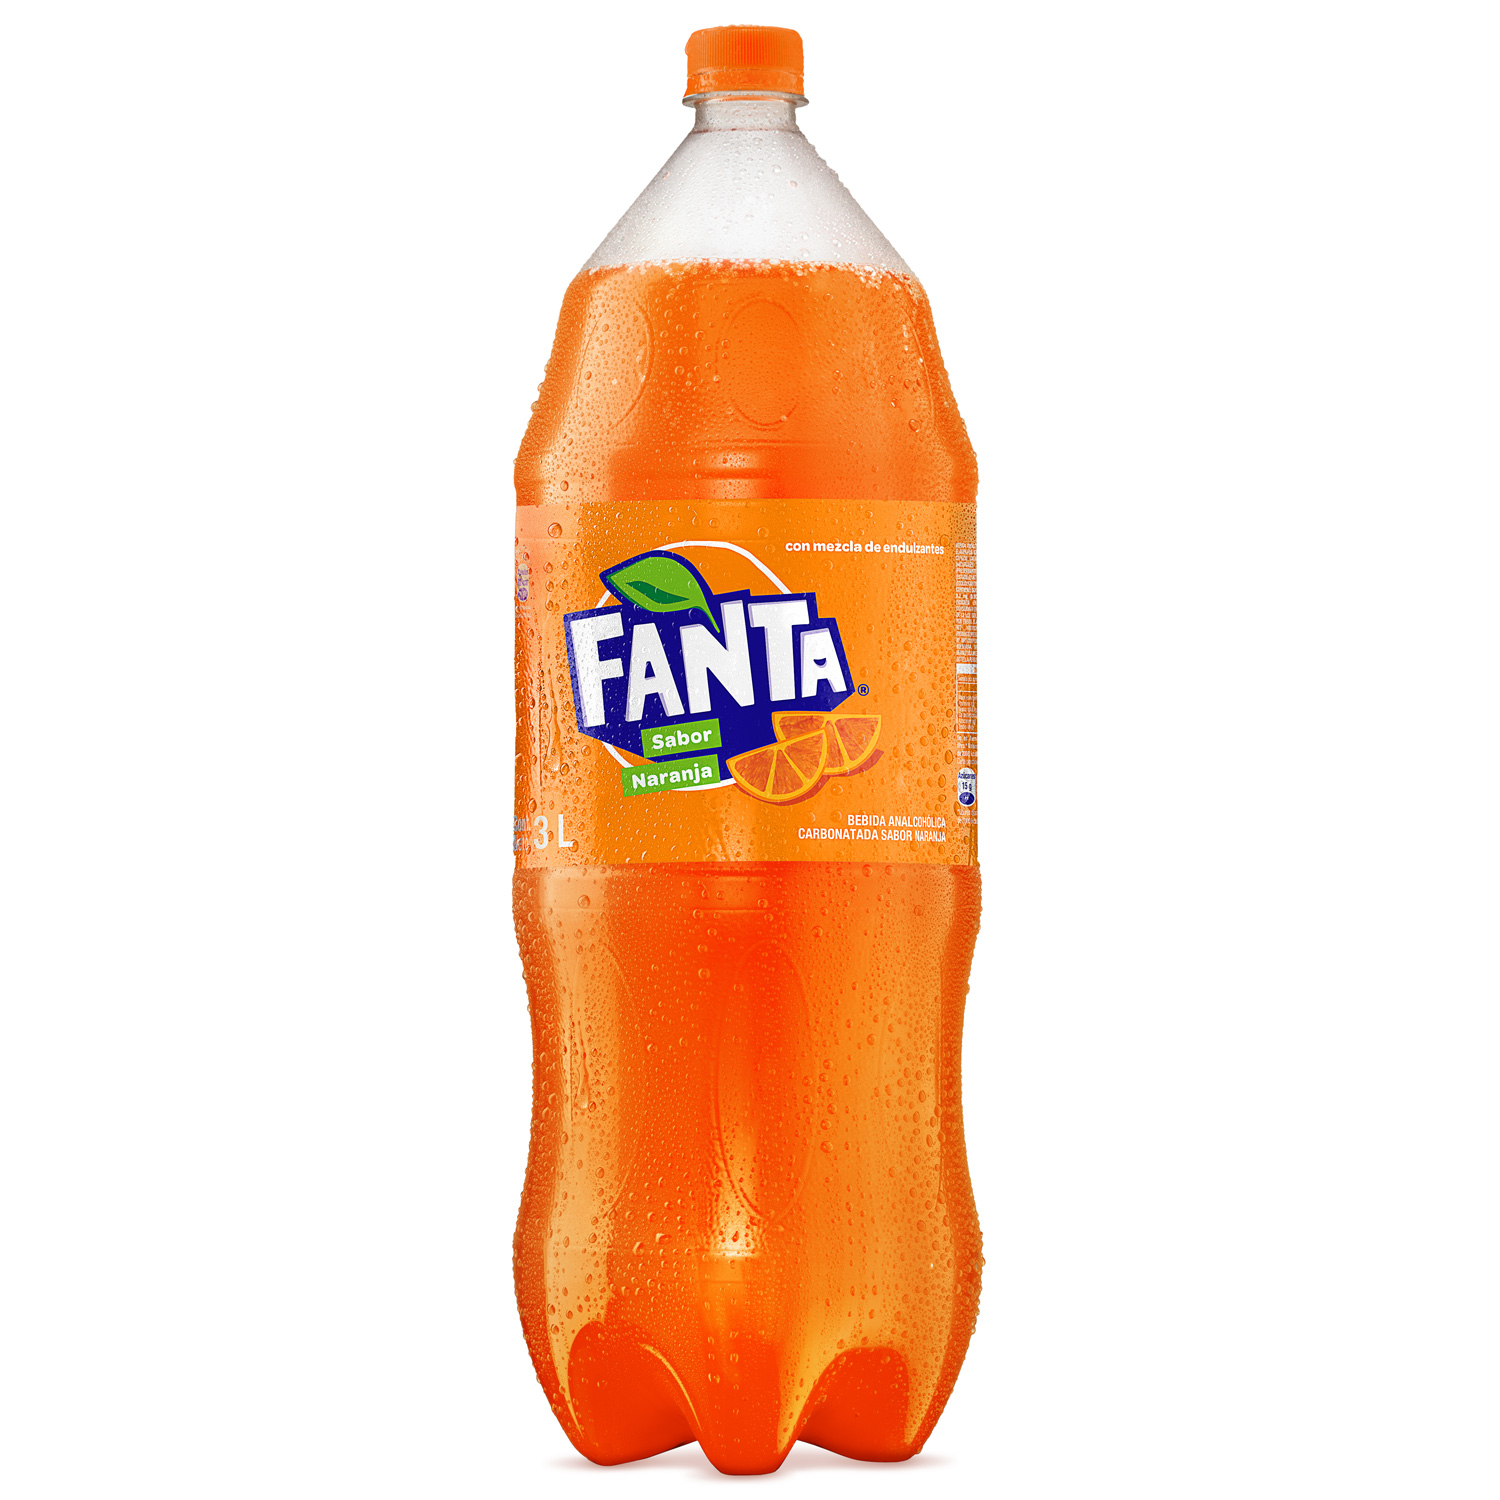 Botella de Fanta Naranja 3L